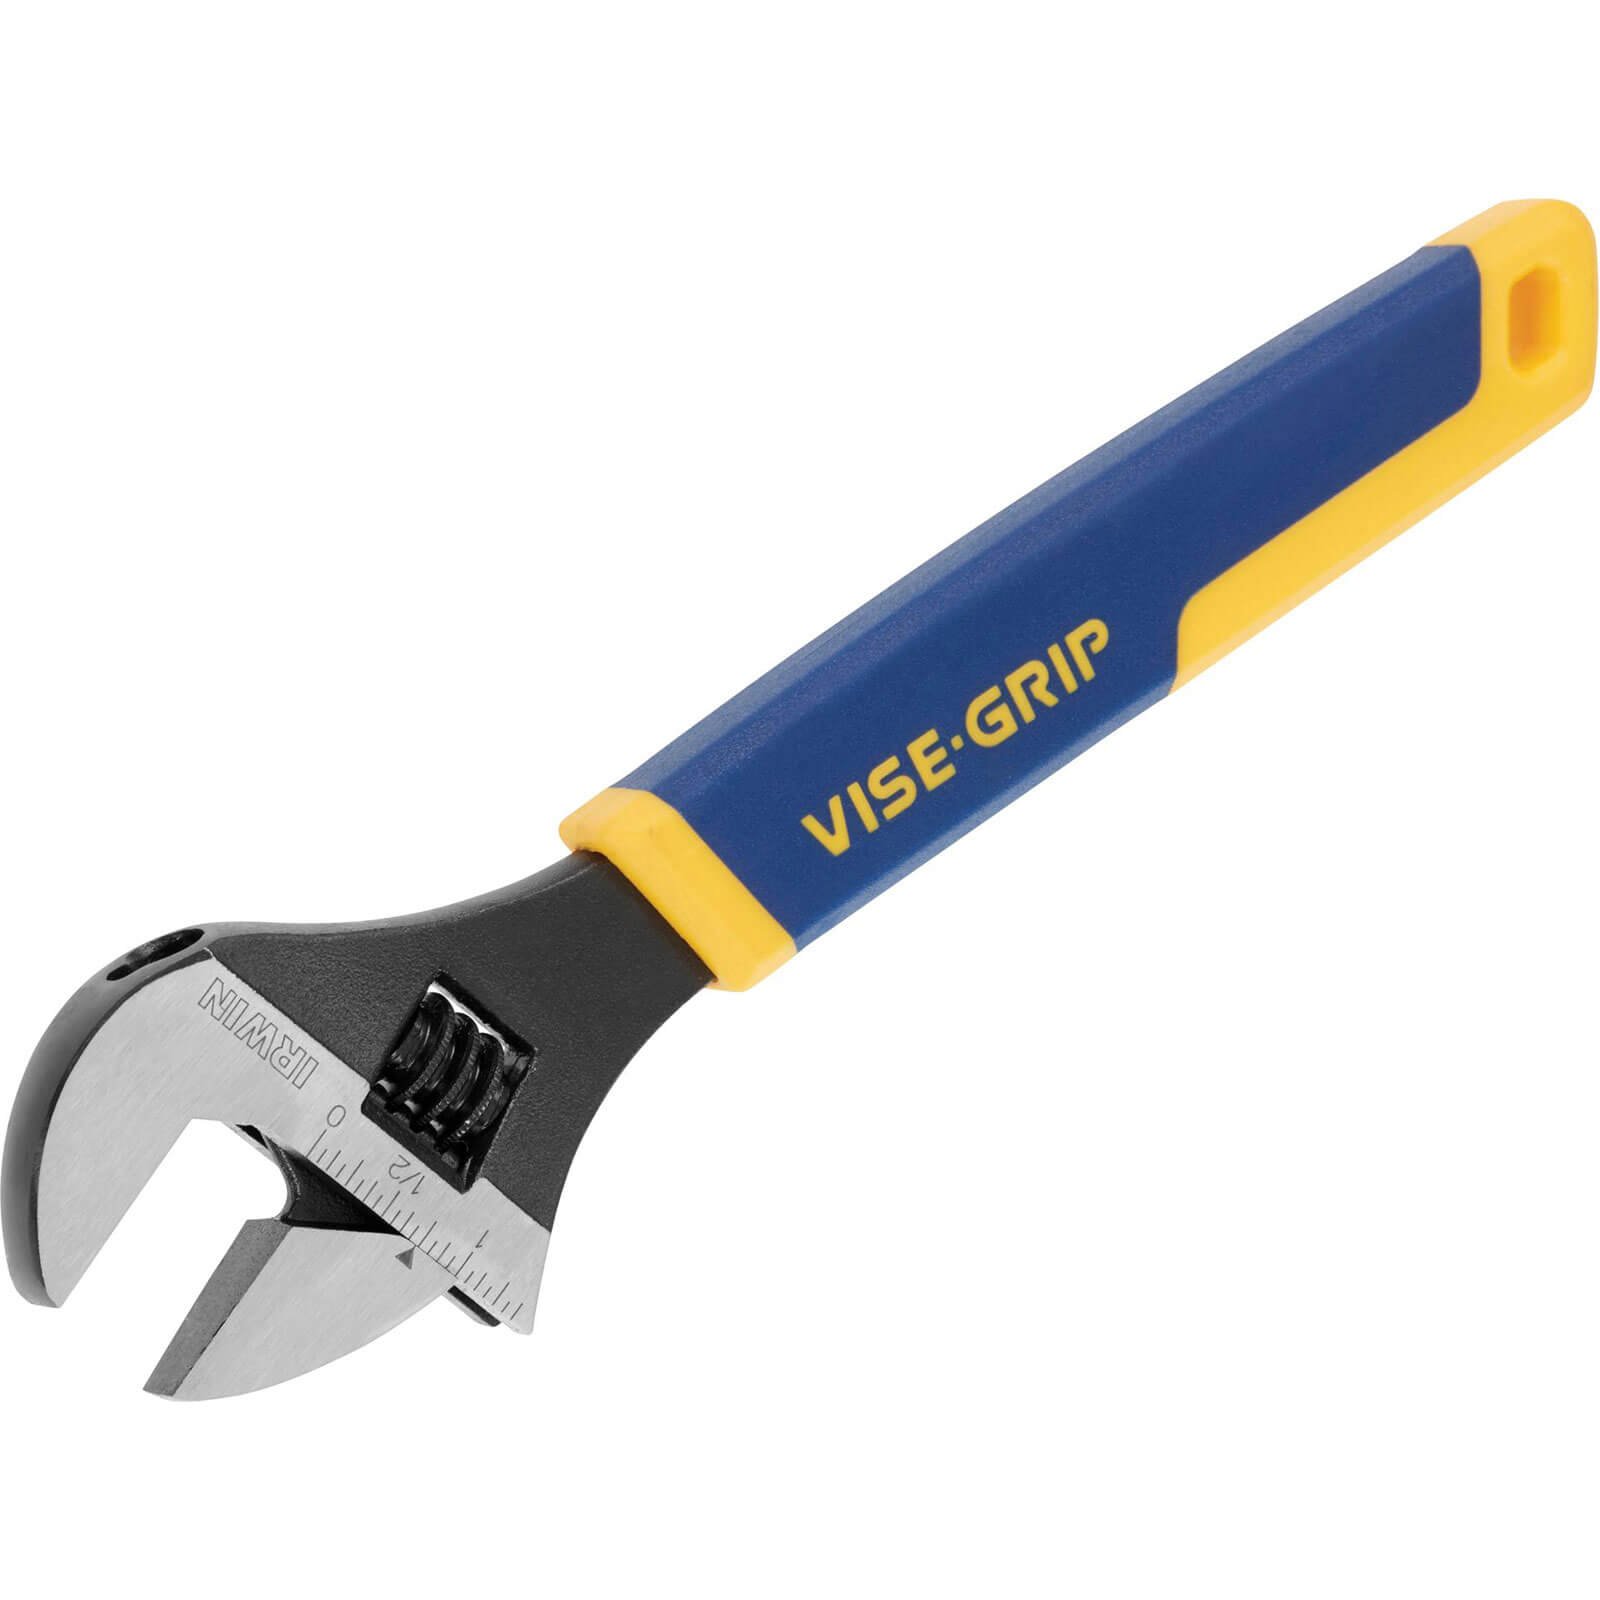 Image of Vise-Grip Adjustable Wrench 250mm